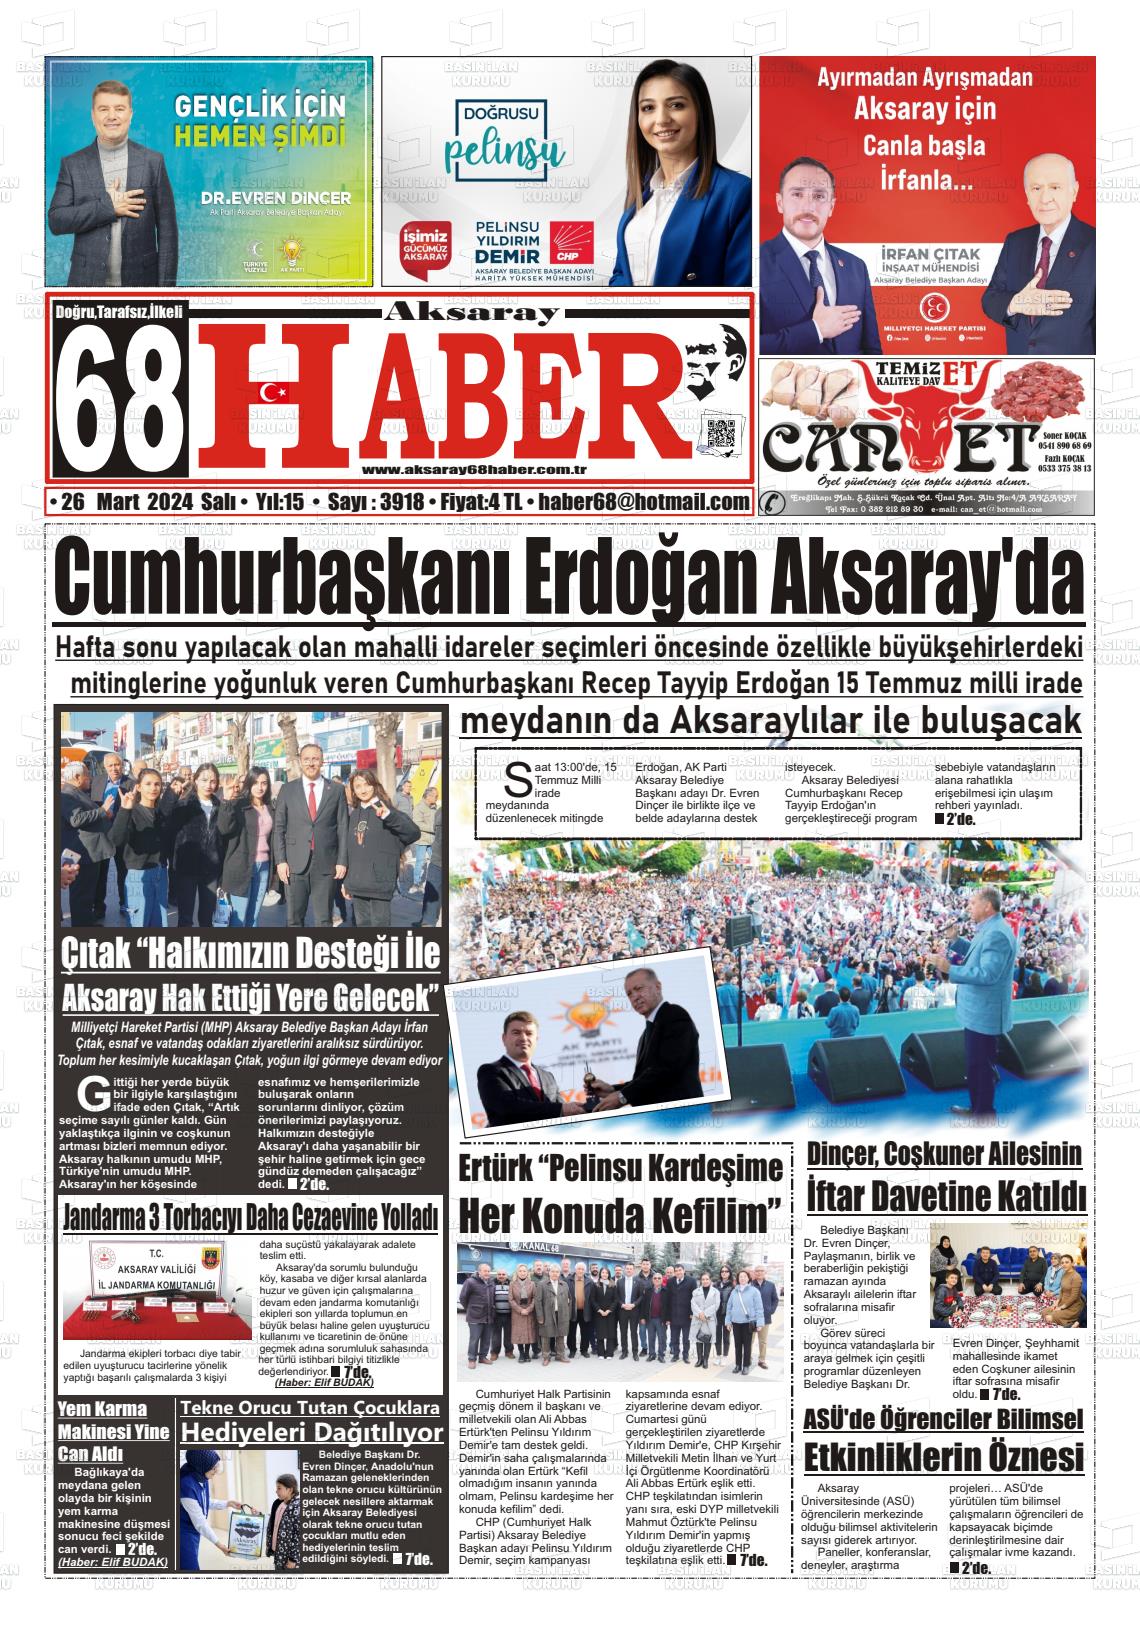 26 Mart 2024 Aksaray 68 Haber Gazete Manşeti